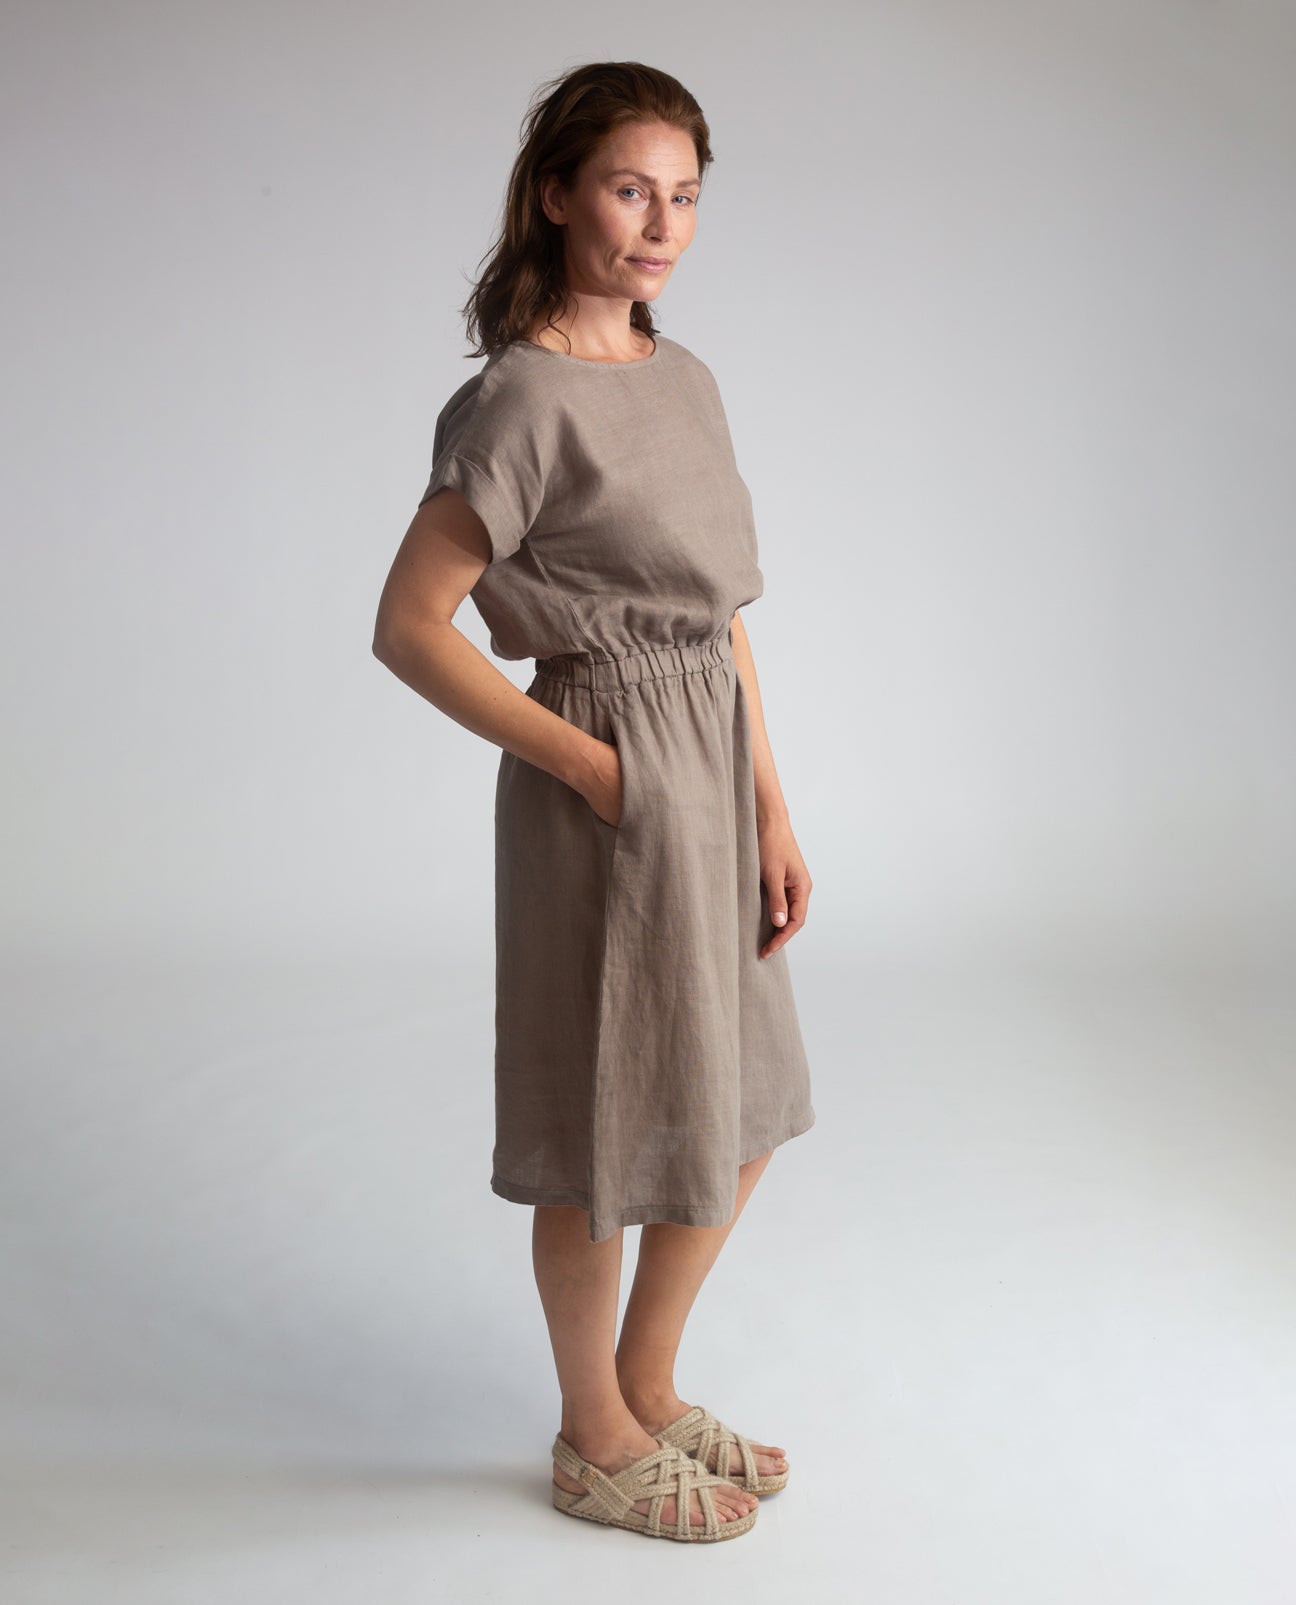 Marissa-May Linen Dress in Olive